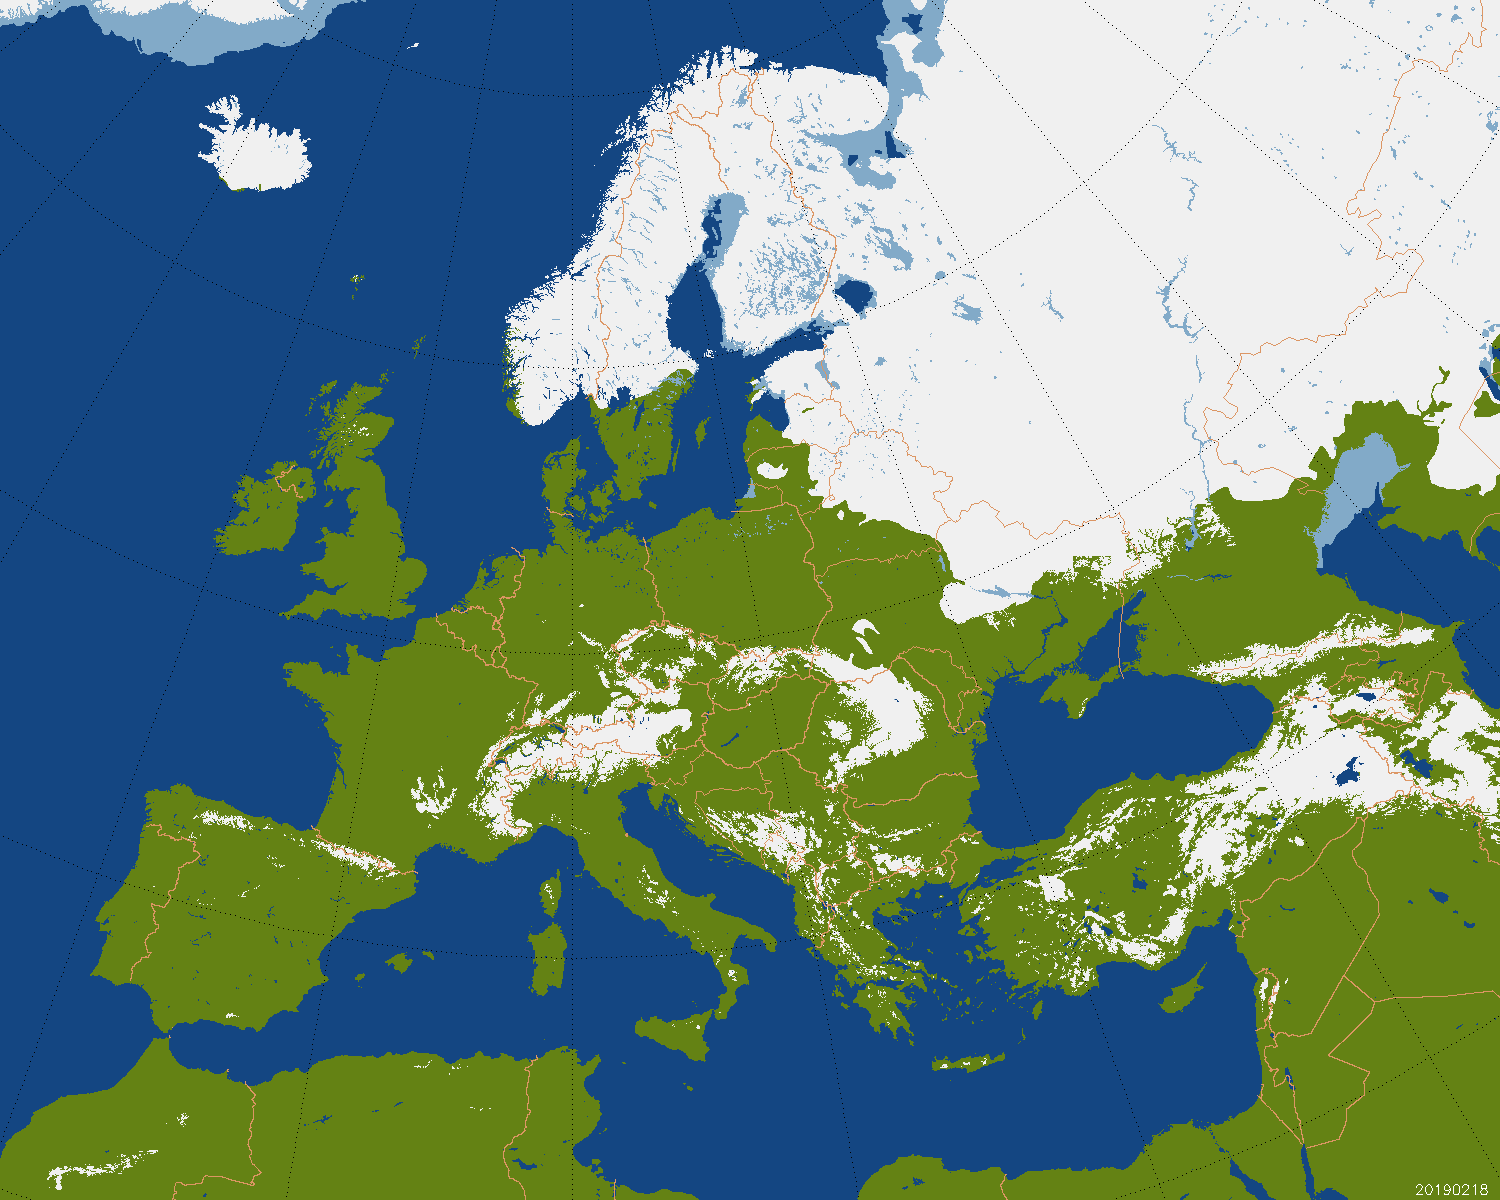 Eu u. Northern Europe Map. Europe North страны. Северная Европа. Северная Европа Скандинавия Великобритания.